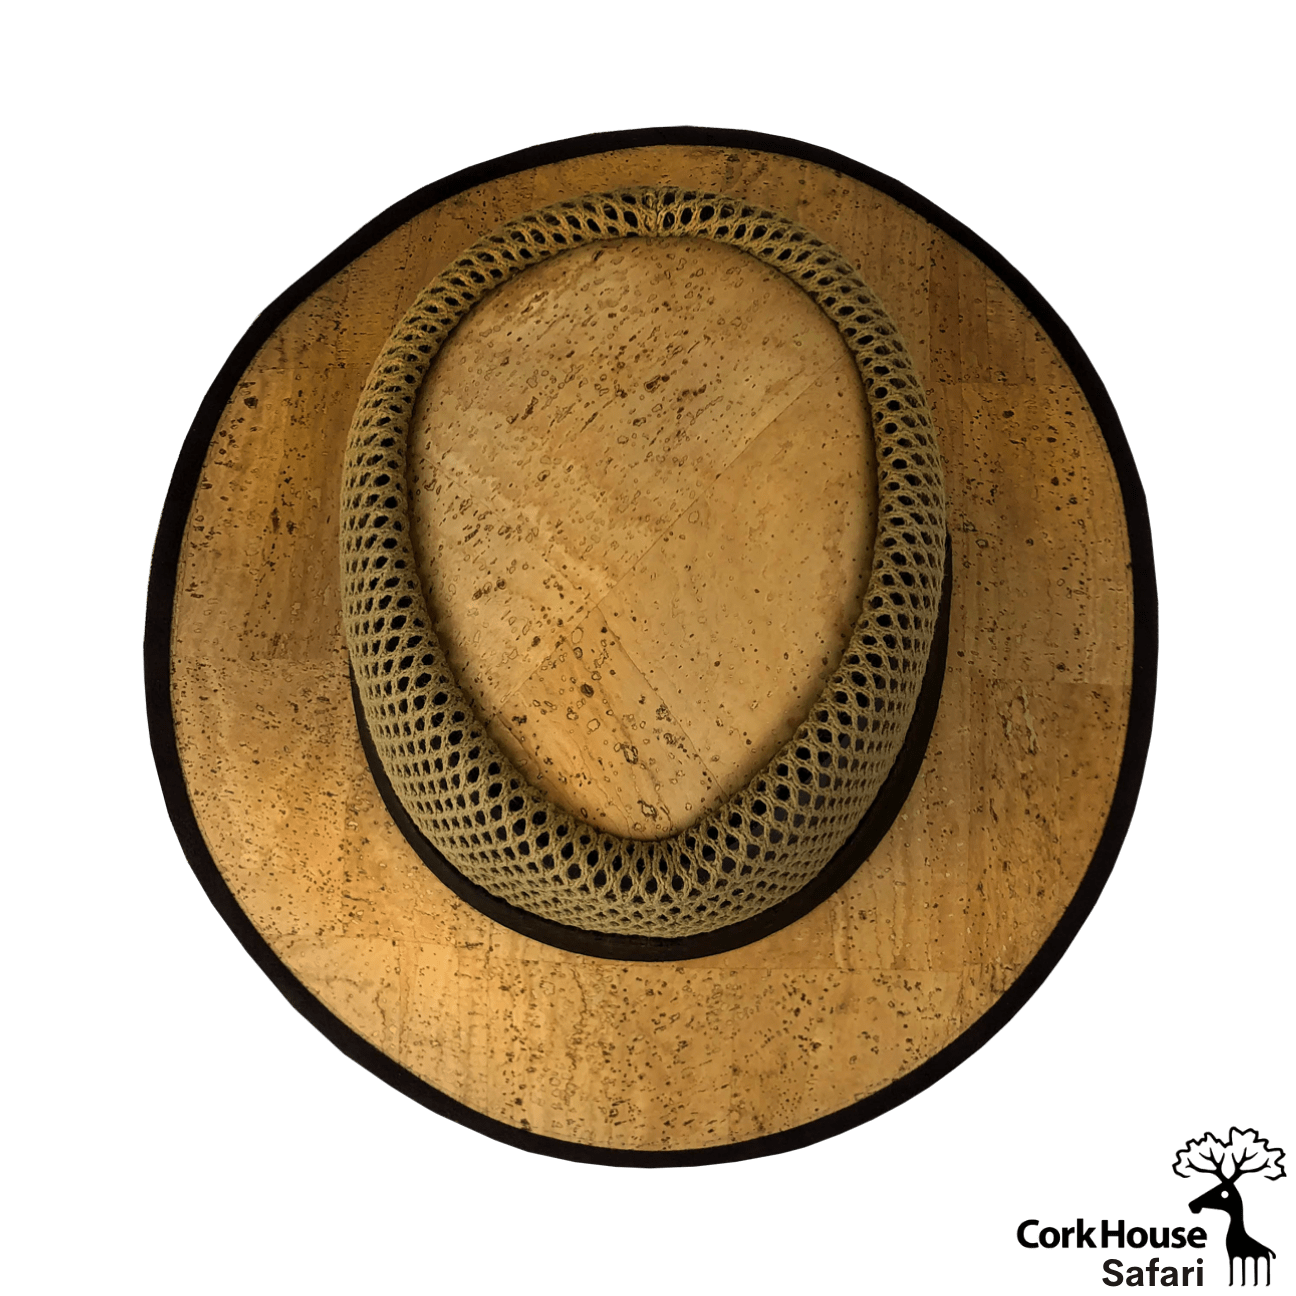 A top view of the cork safari hat highlighting the natural cork top and brim and dark brown rim.